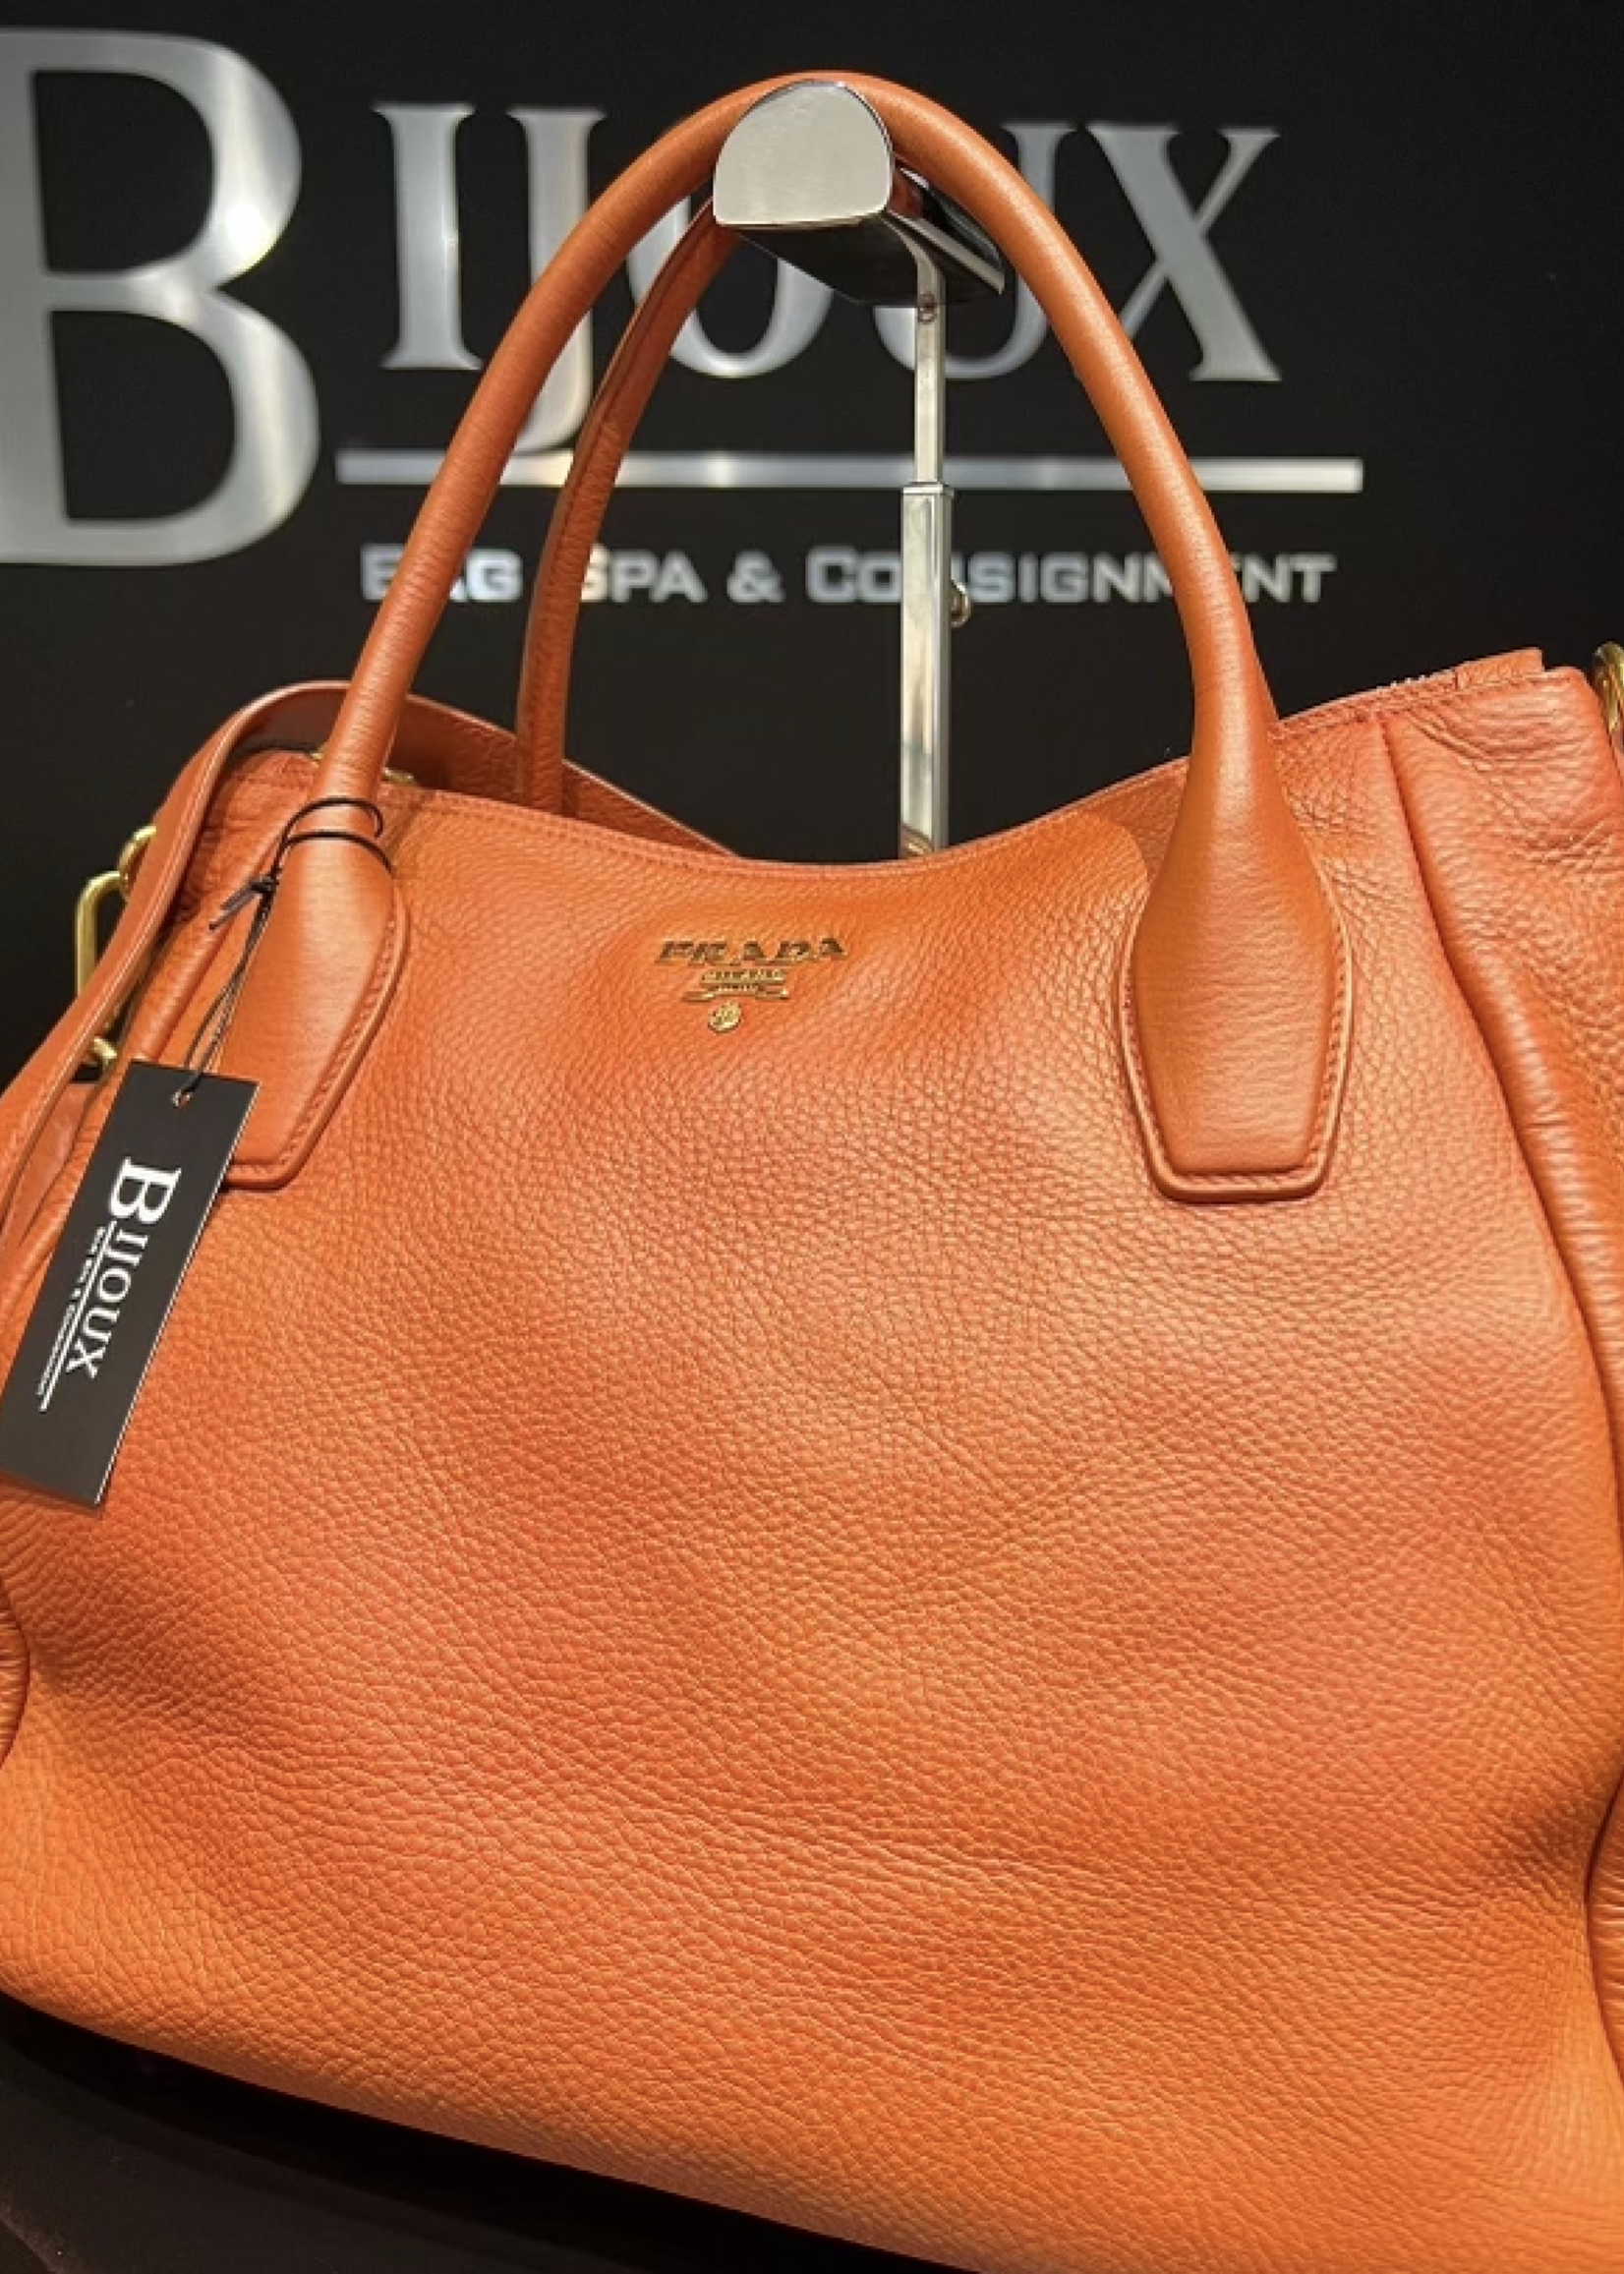 saffiano leather handbag